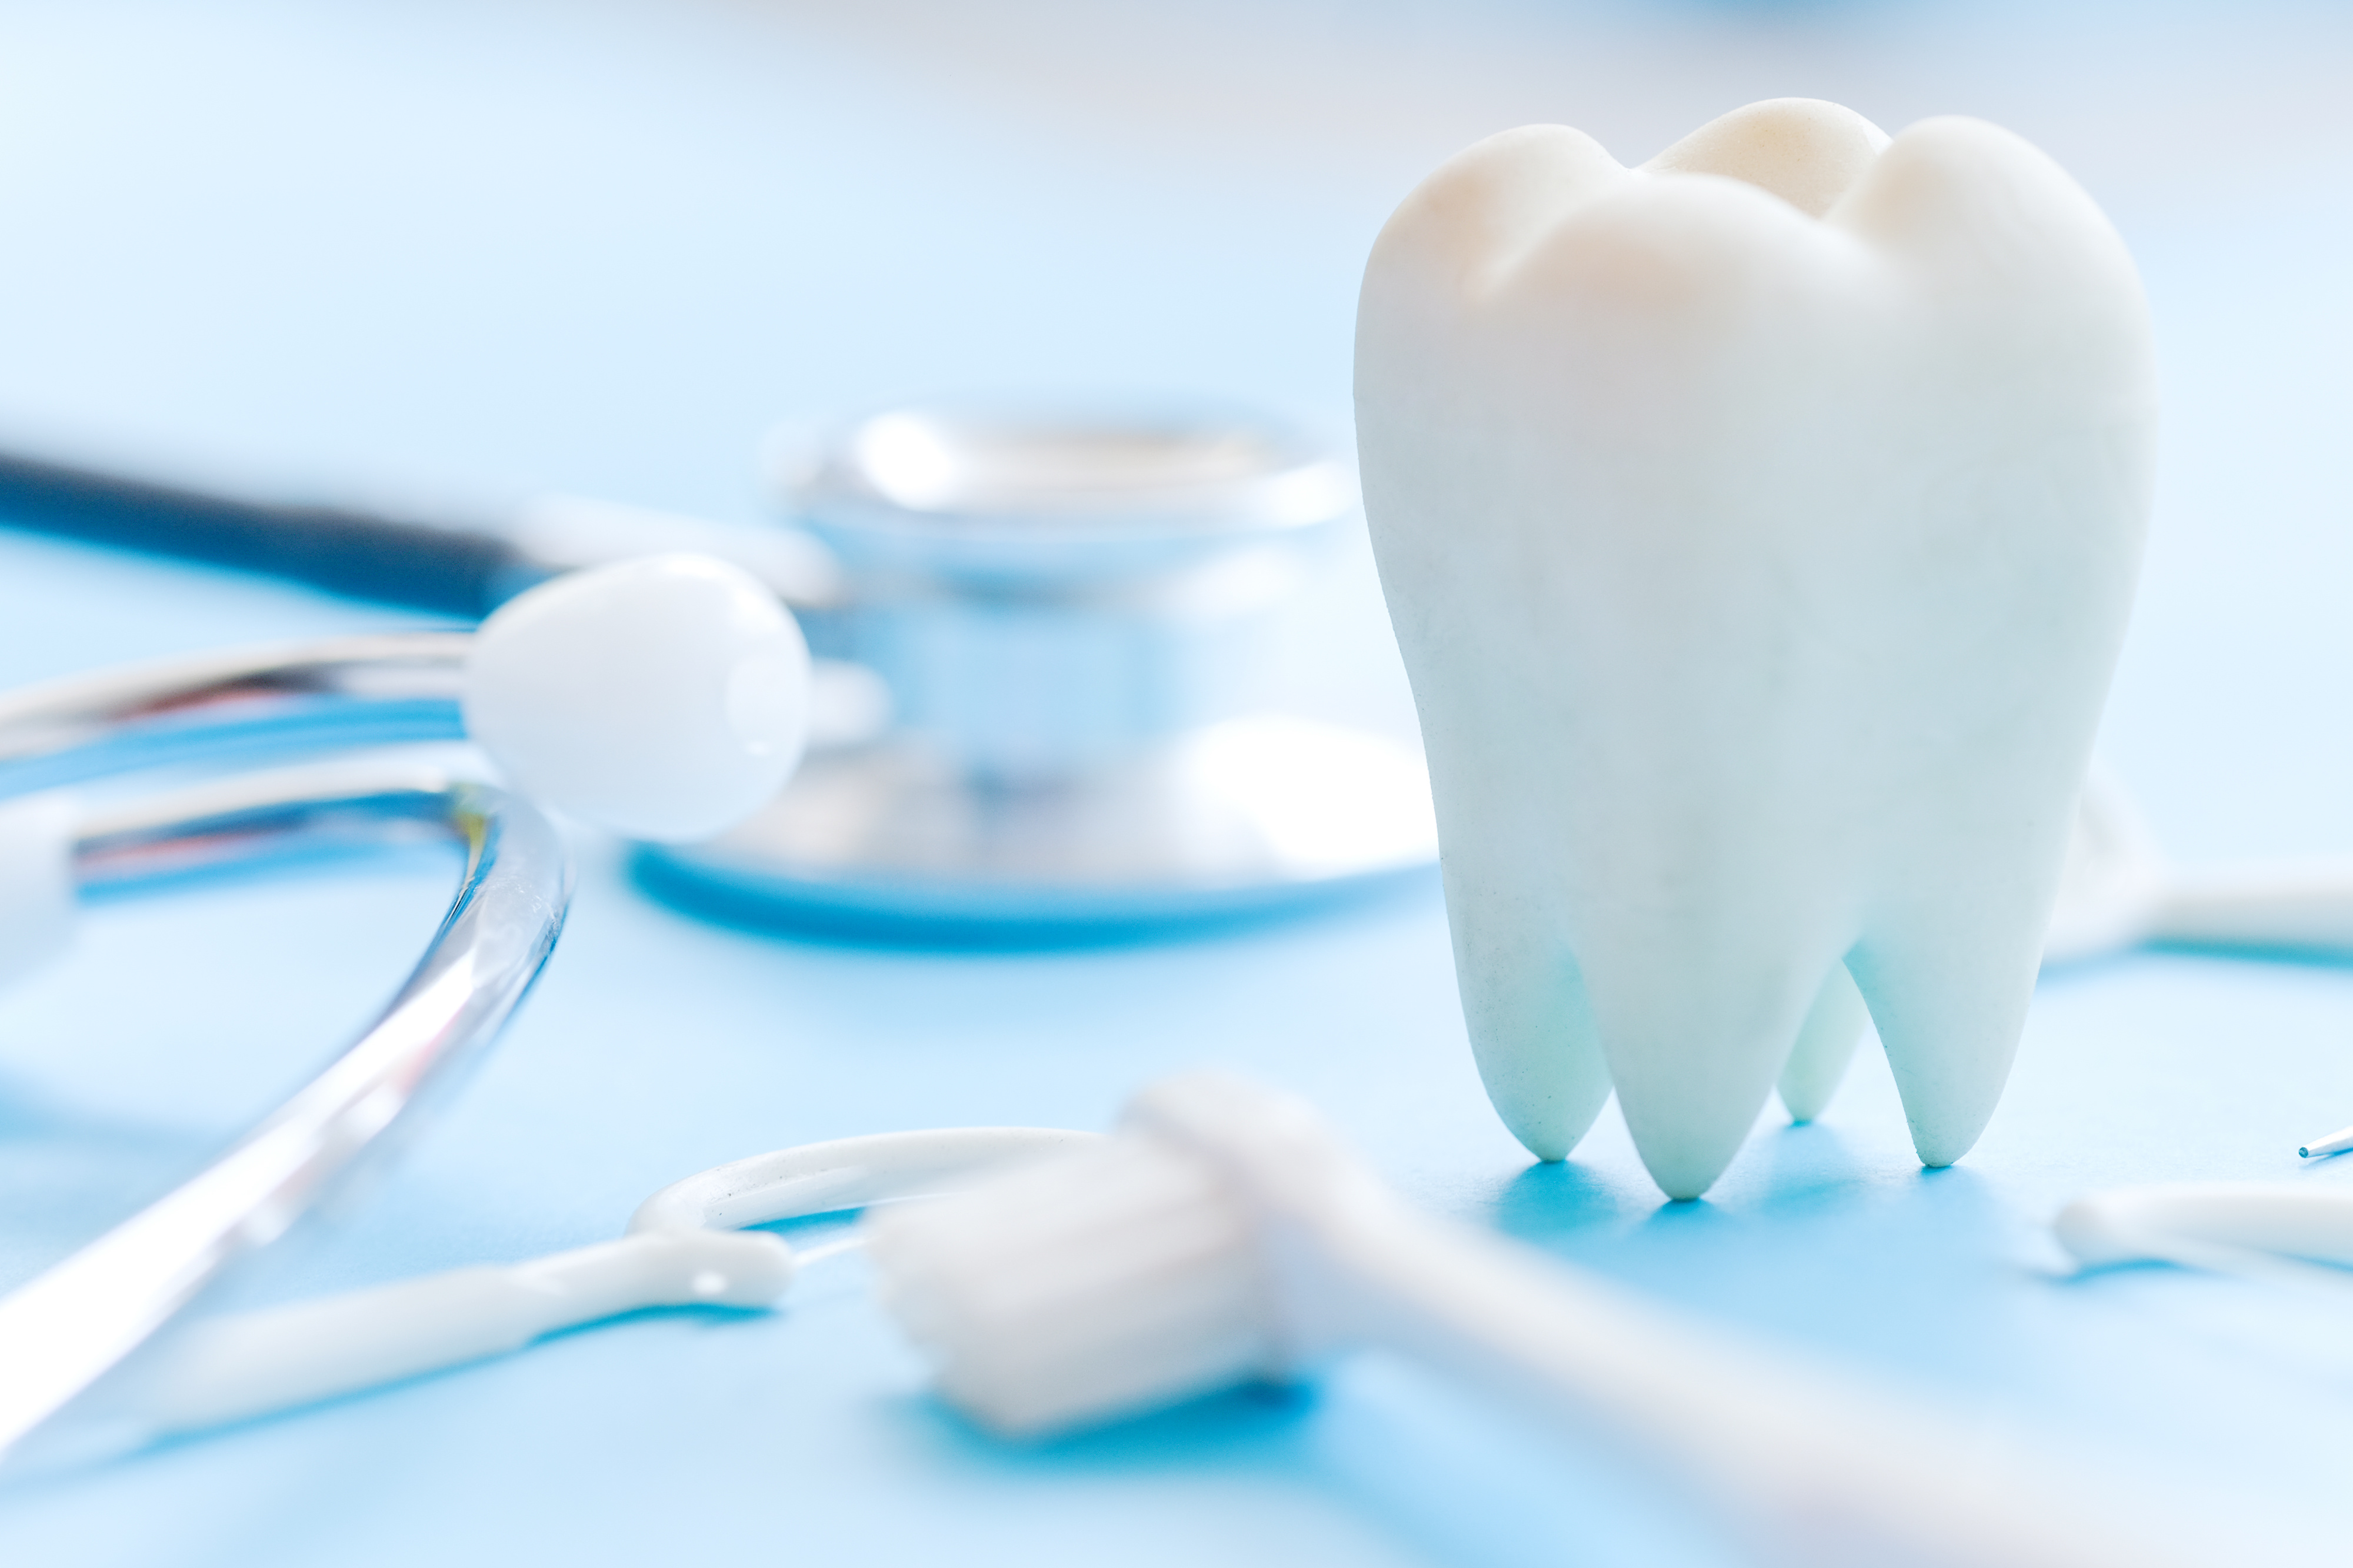 Dental model and dental equipment on blue background, concept image of